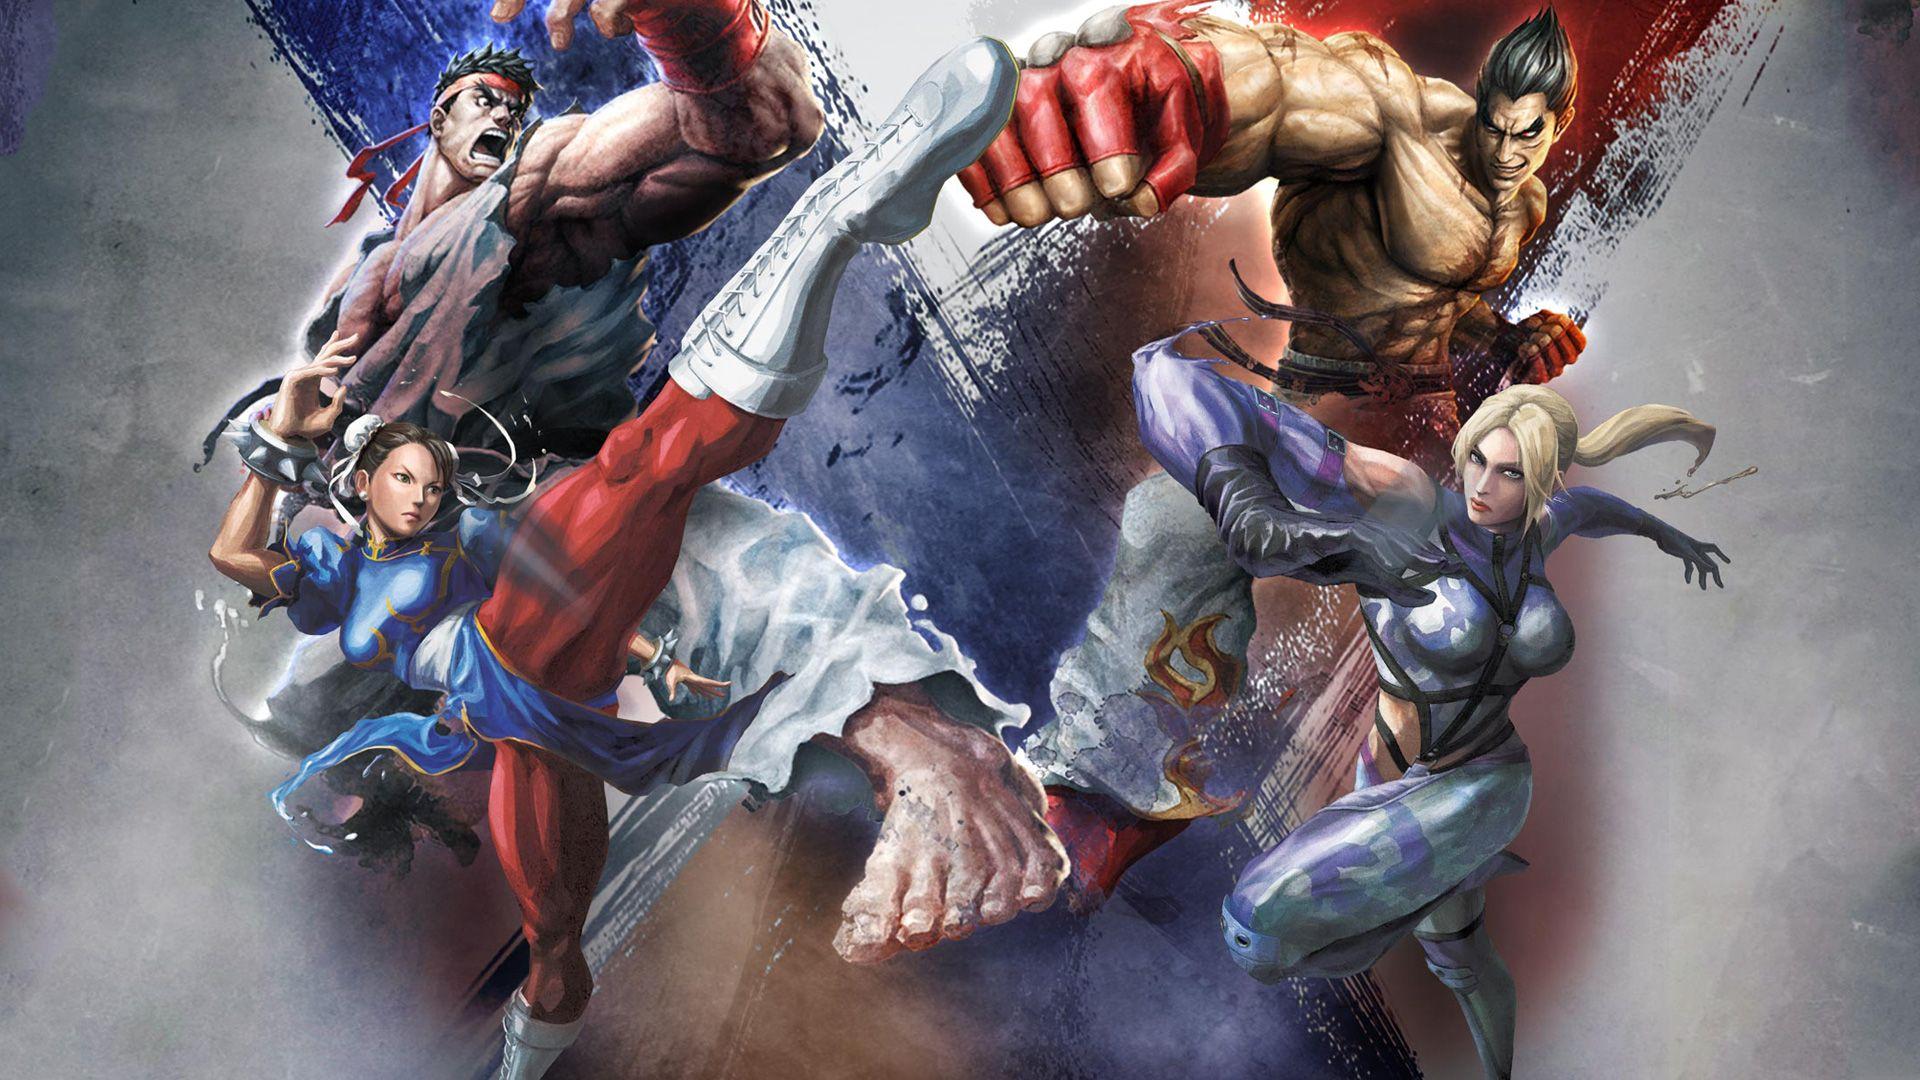 Street Fighter X Tekken HD Wallpaper 8 X 1080